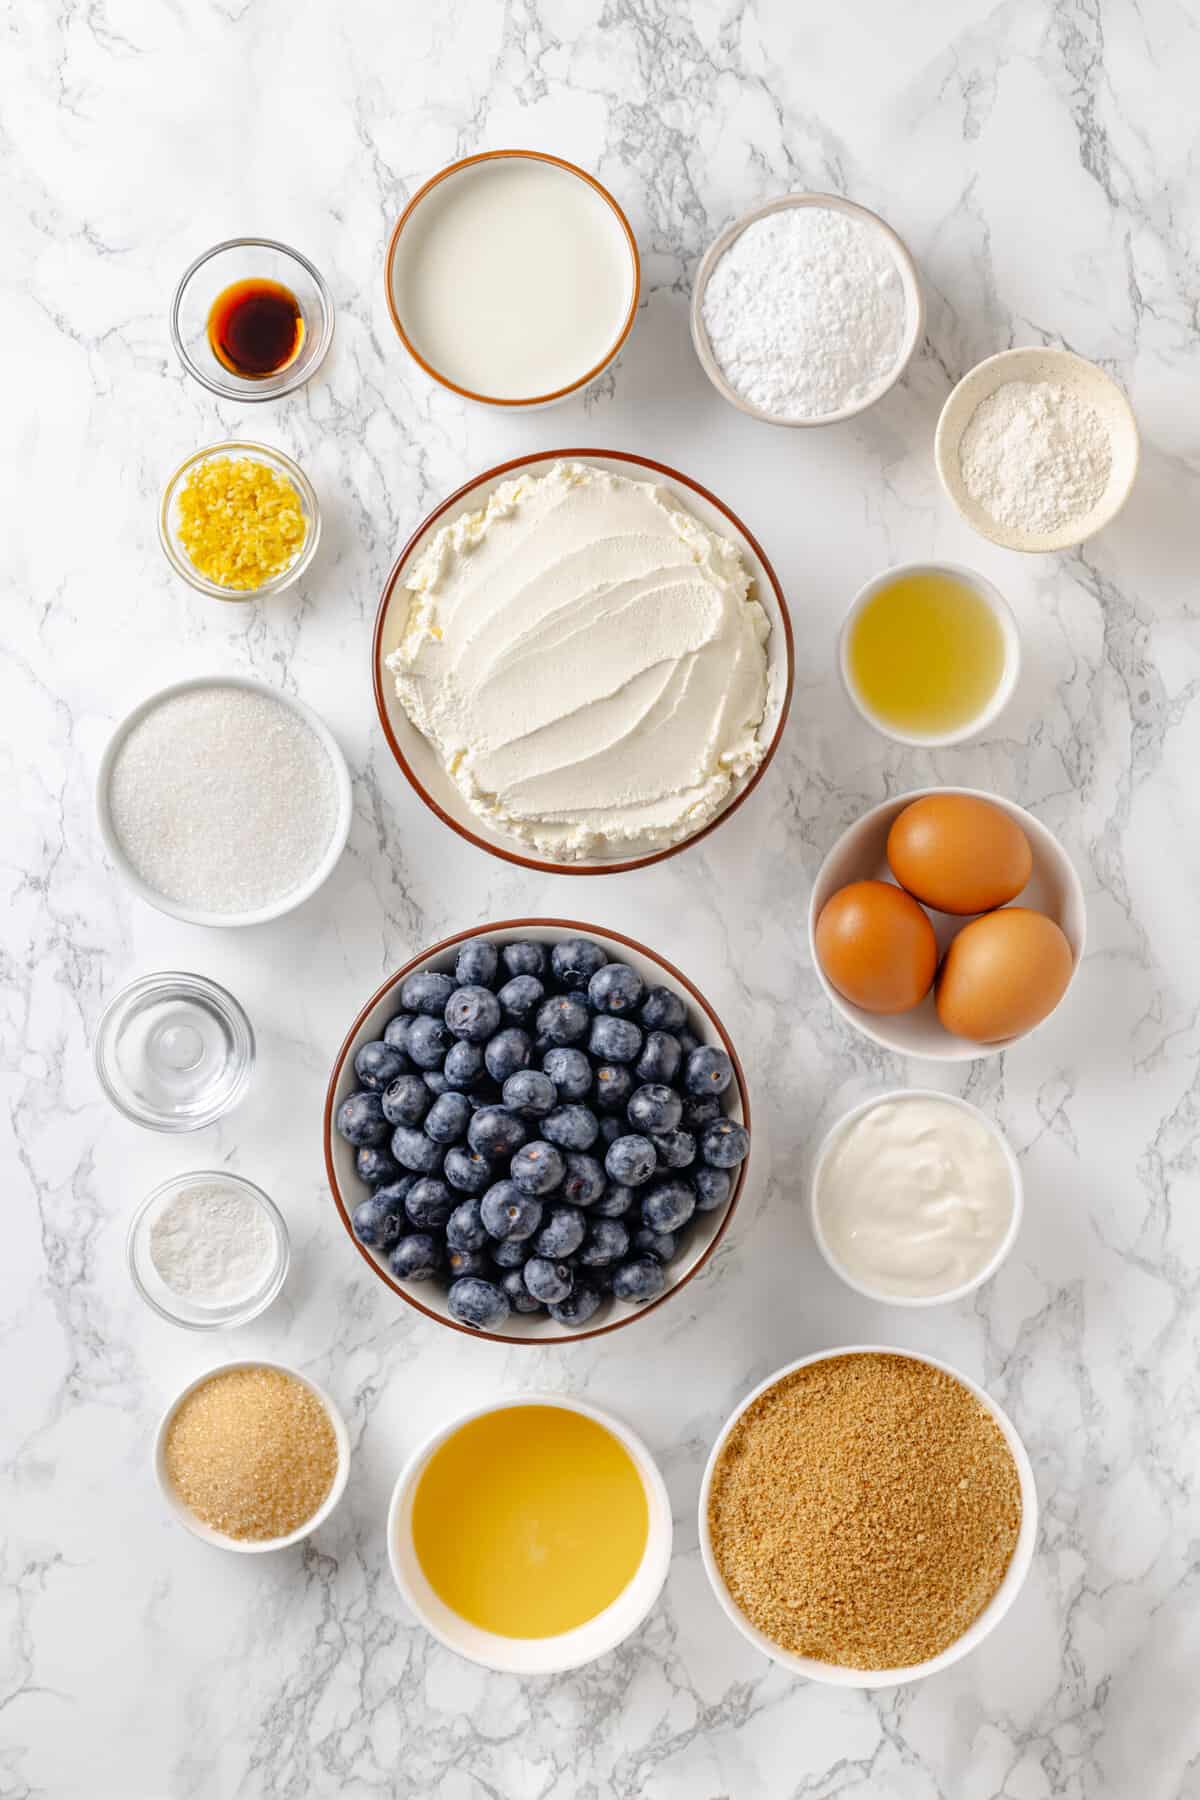 ingredients to make lemon blueberry cheesecake.